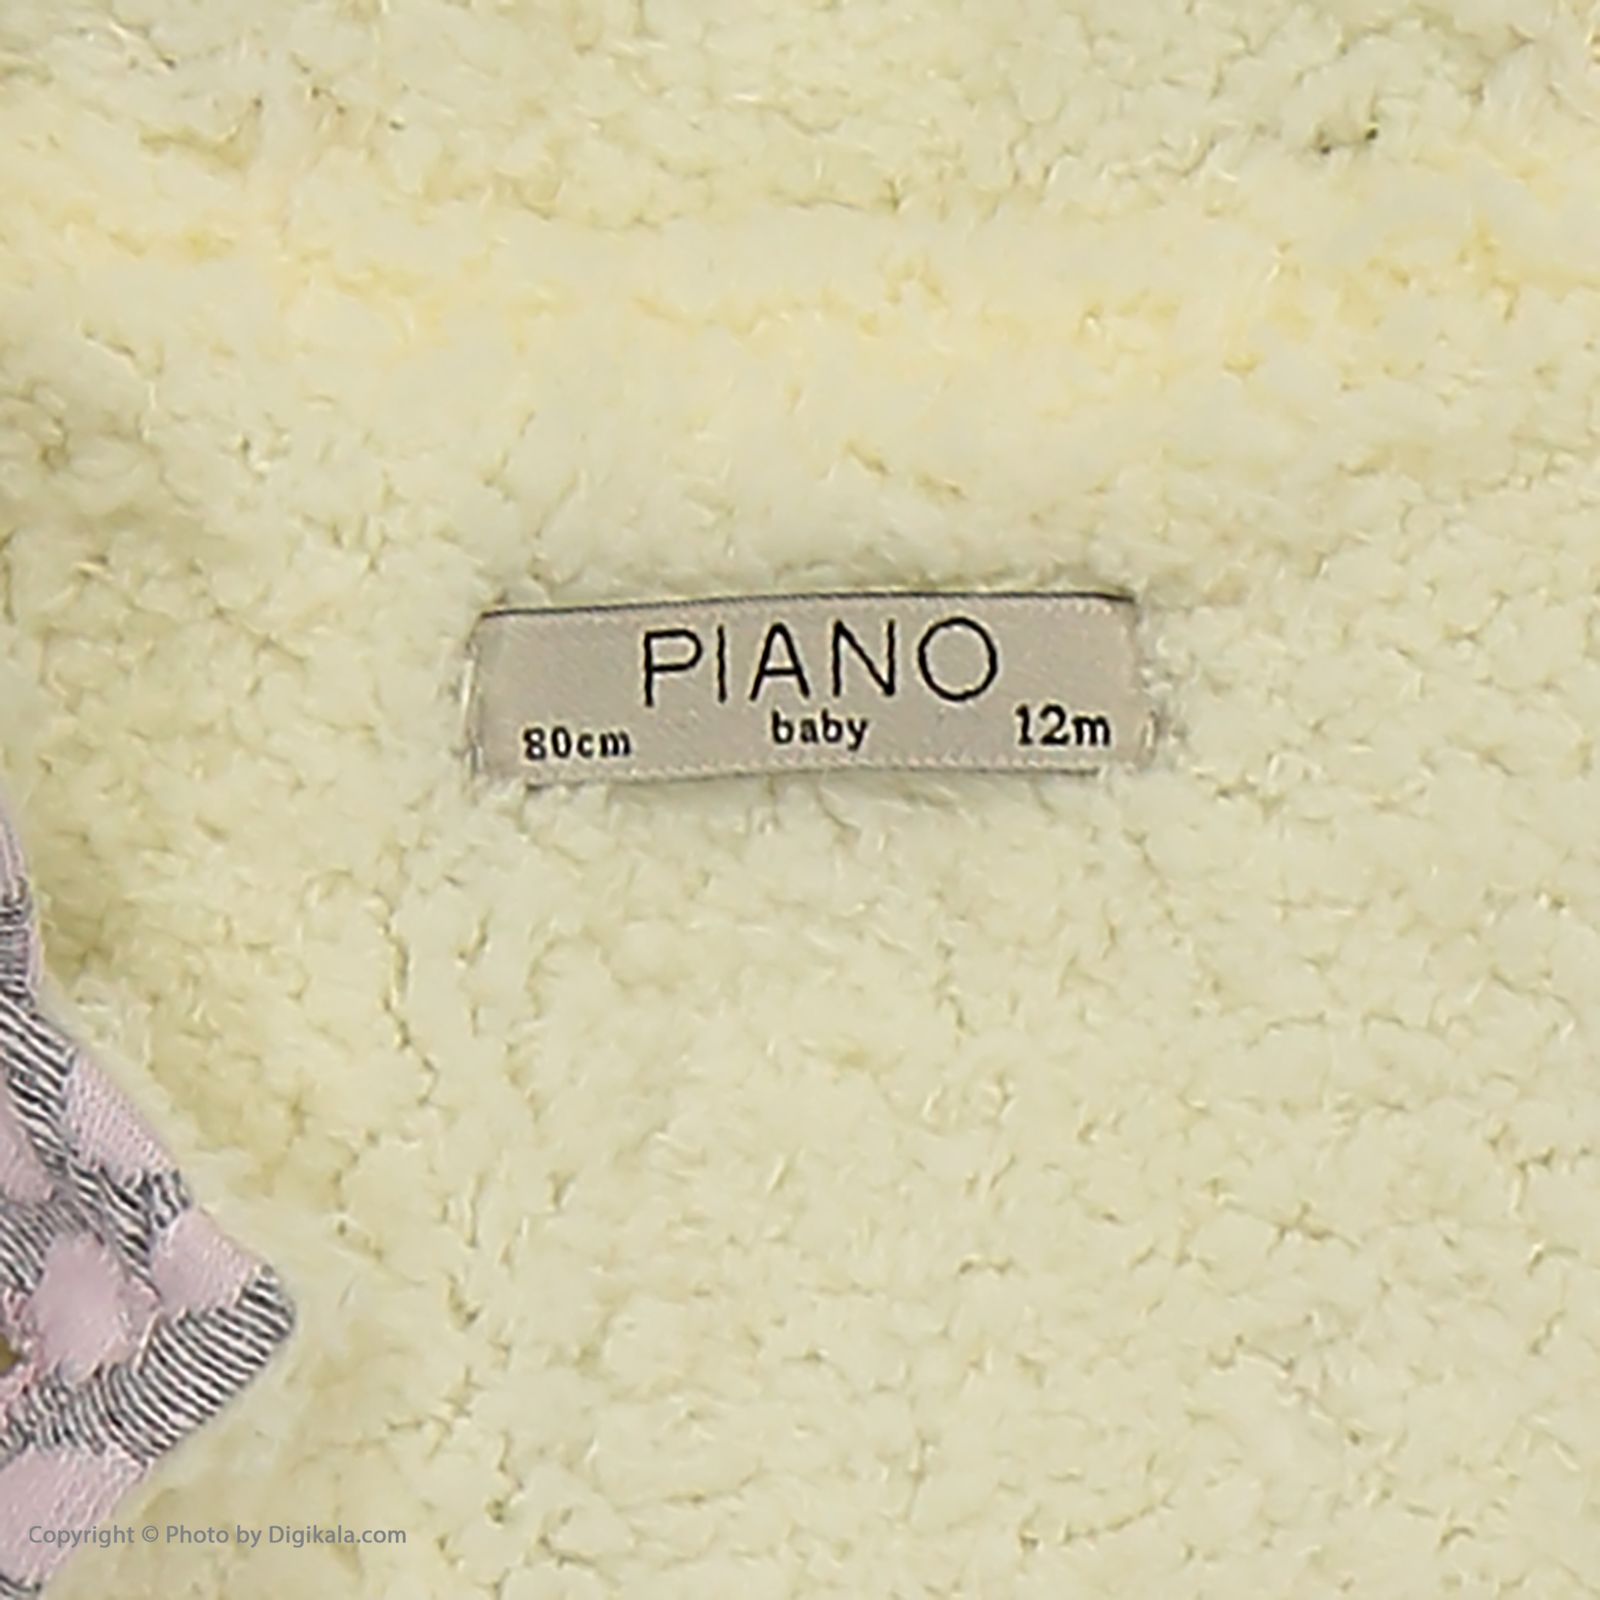 سویشرت نوزادی دخترانه پیانو مدل 1009009801033-84 -  - 5